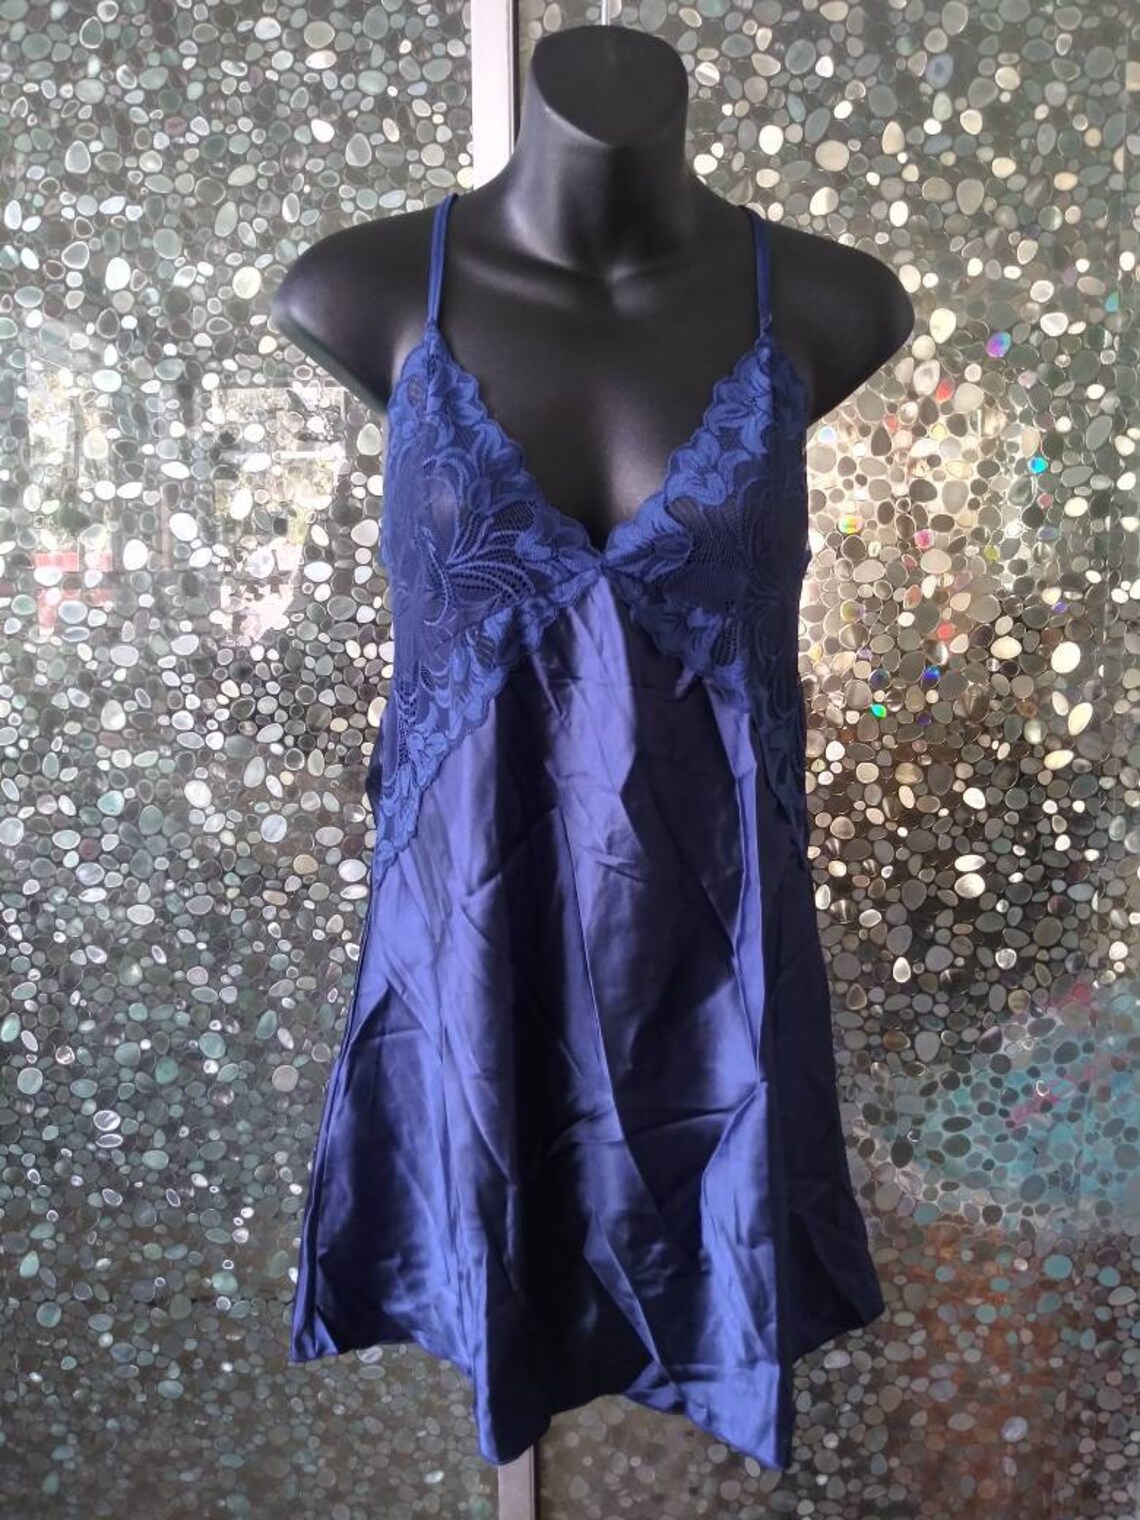 Midnight Blue Satin Teddy Babydoll Lingerie Nightgown | Etsy